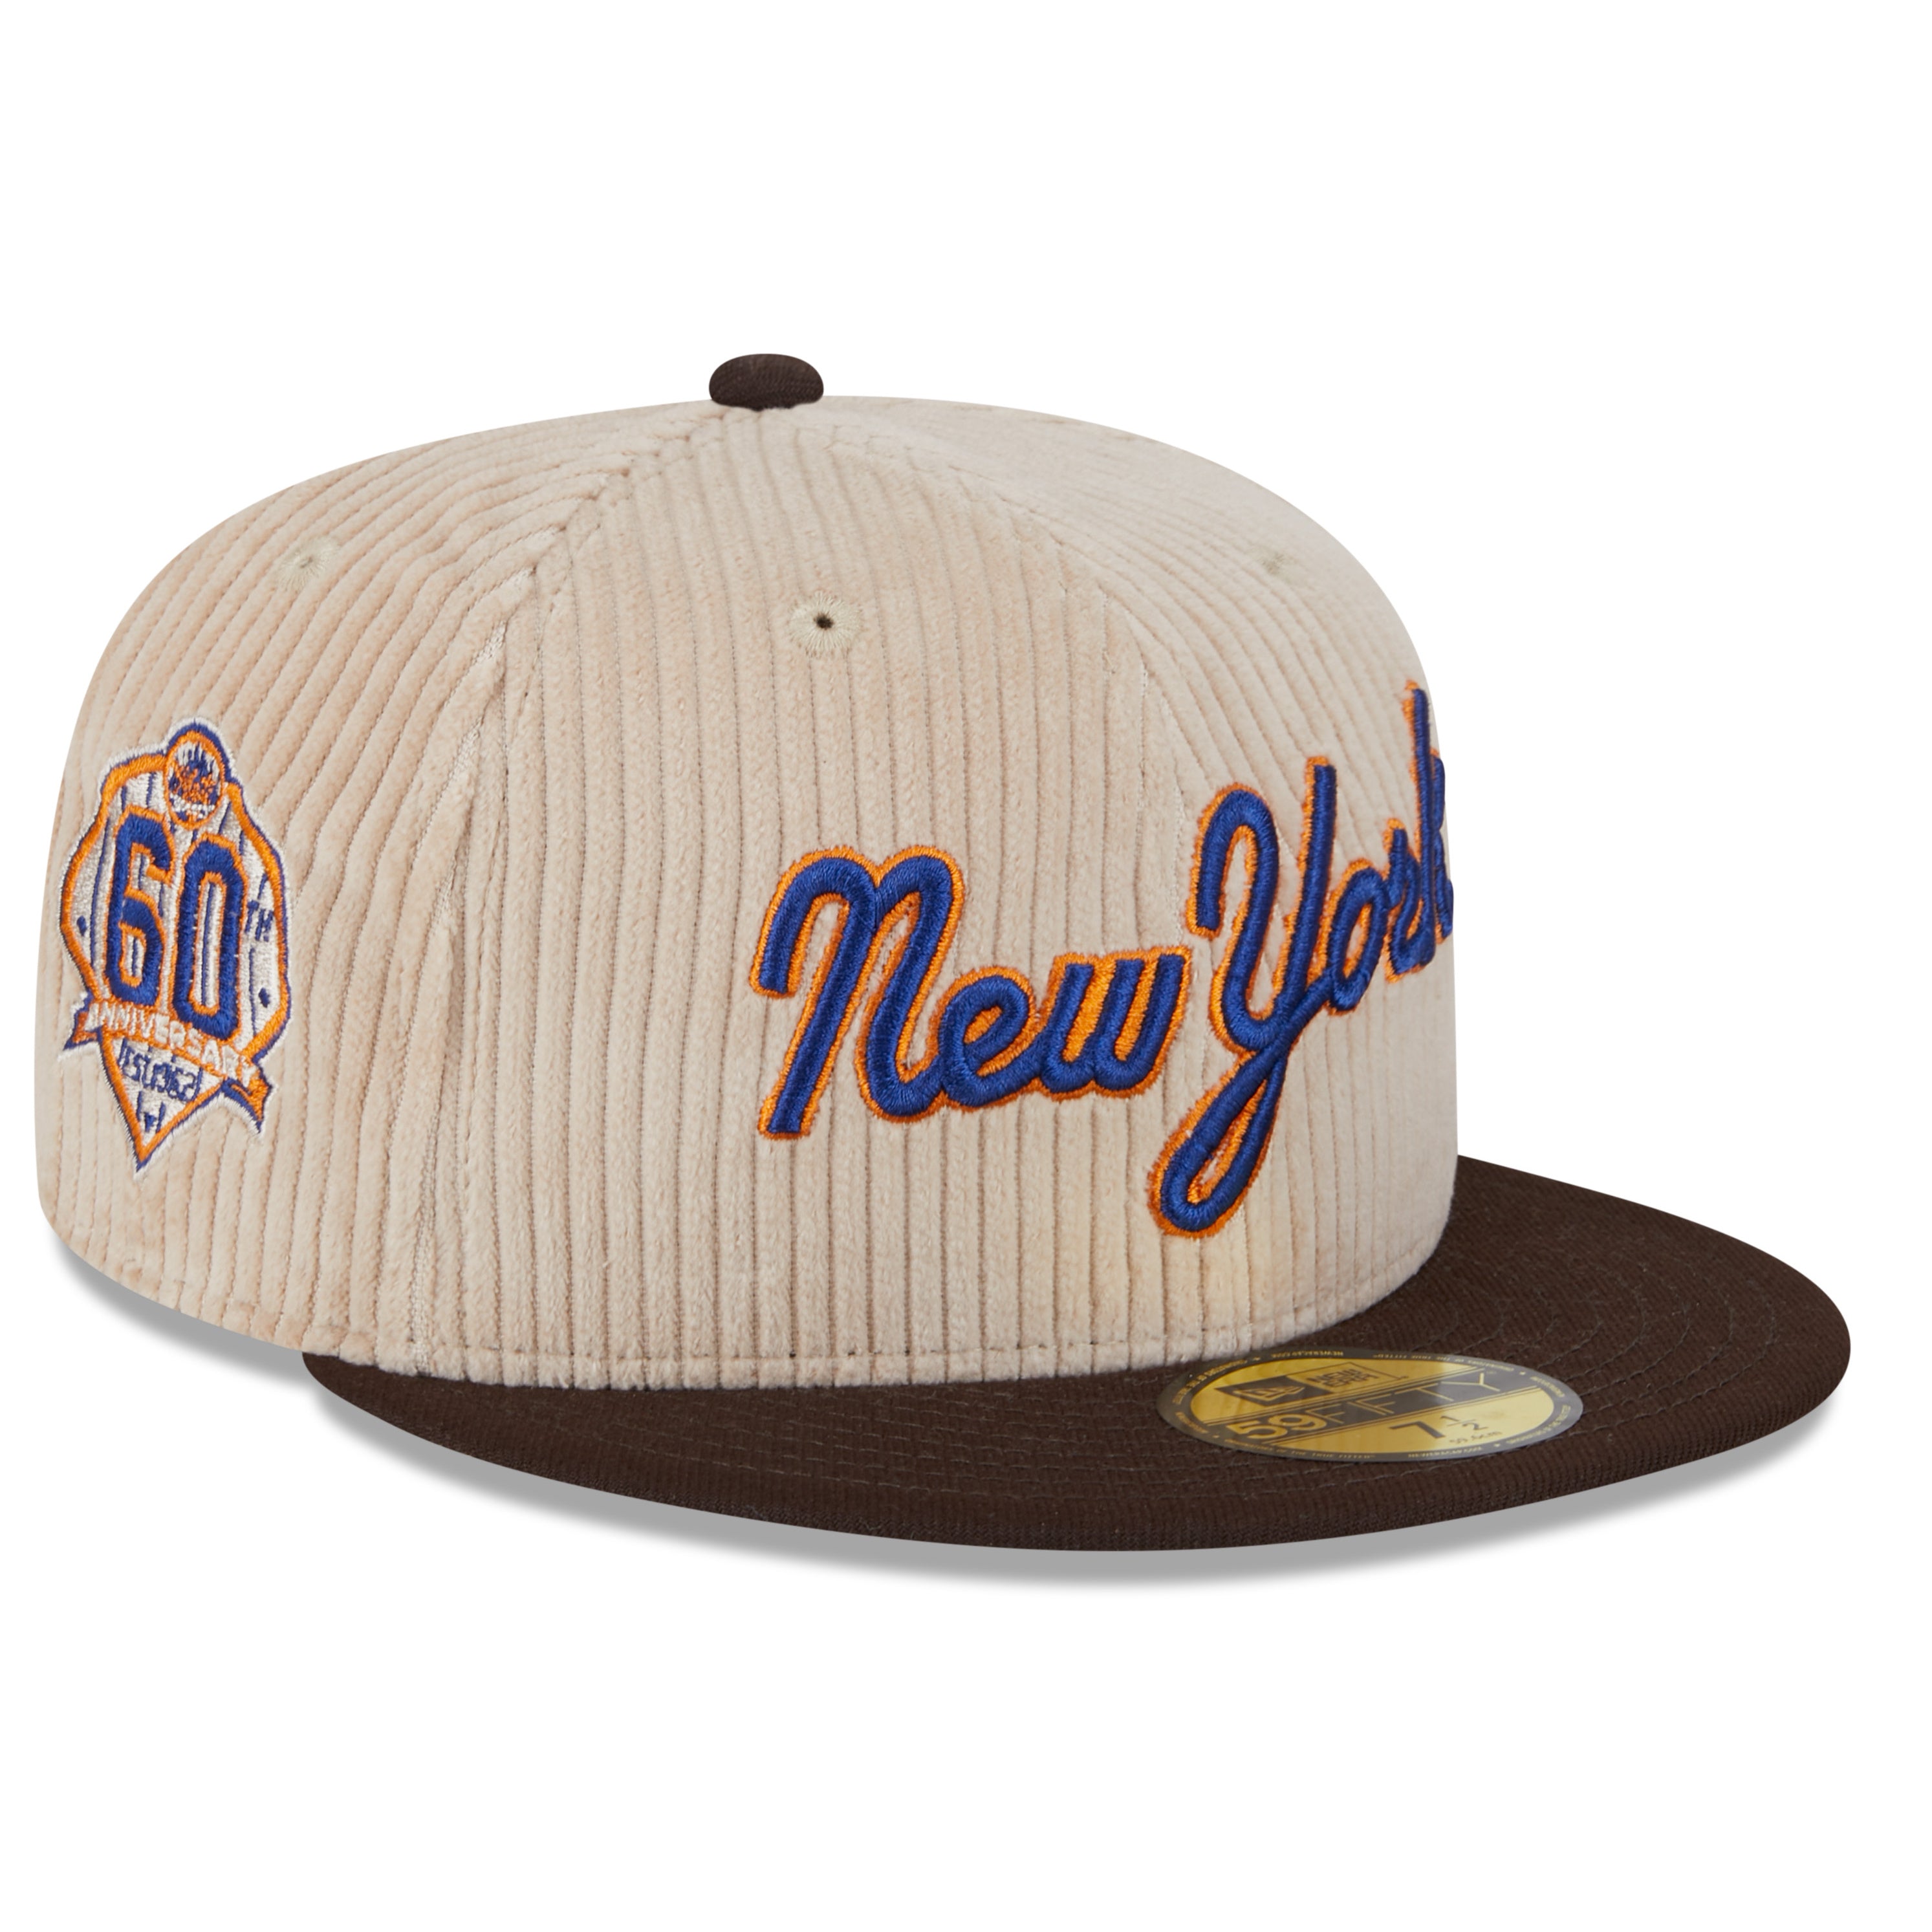 New York Yankees New Era 59FIFTY Fitted Hat 2018 (Black White Gray Under BRIM) 7 3/8